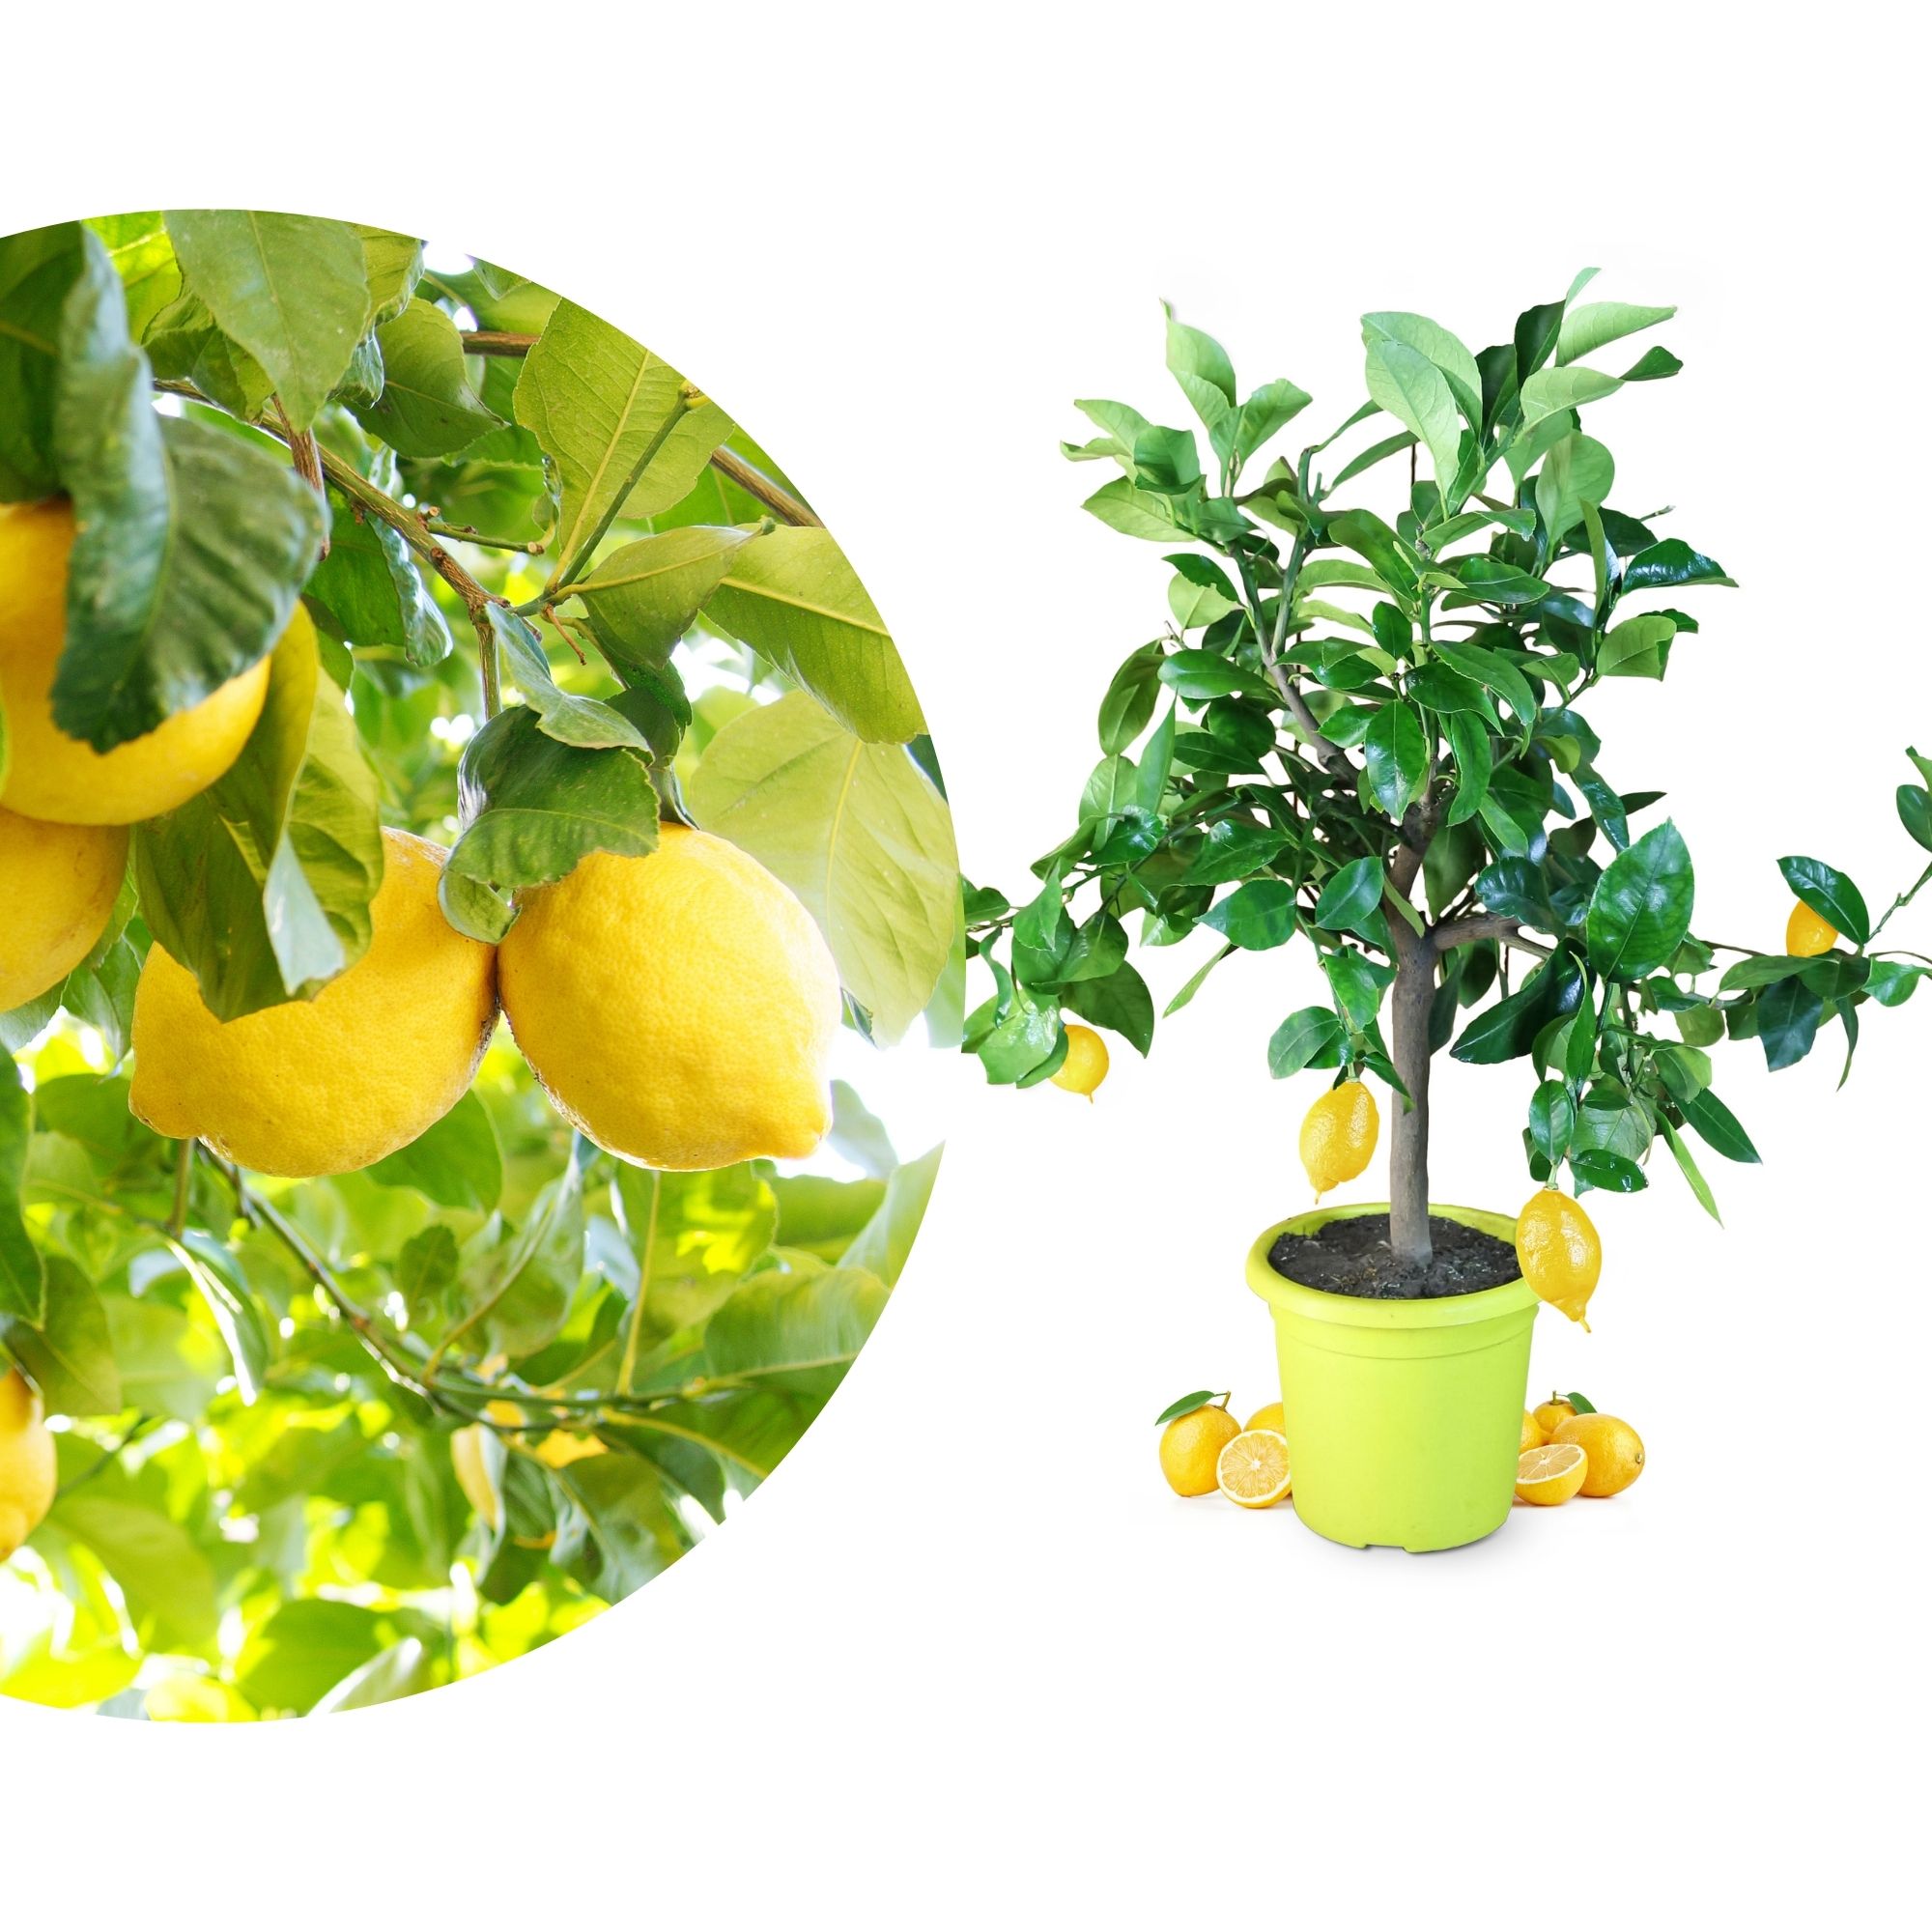 Zitronenbaum [Piccolo]  - Citrus limon - echte Zitrone